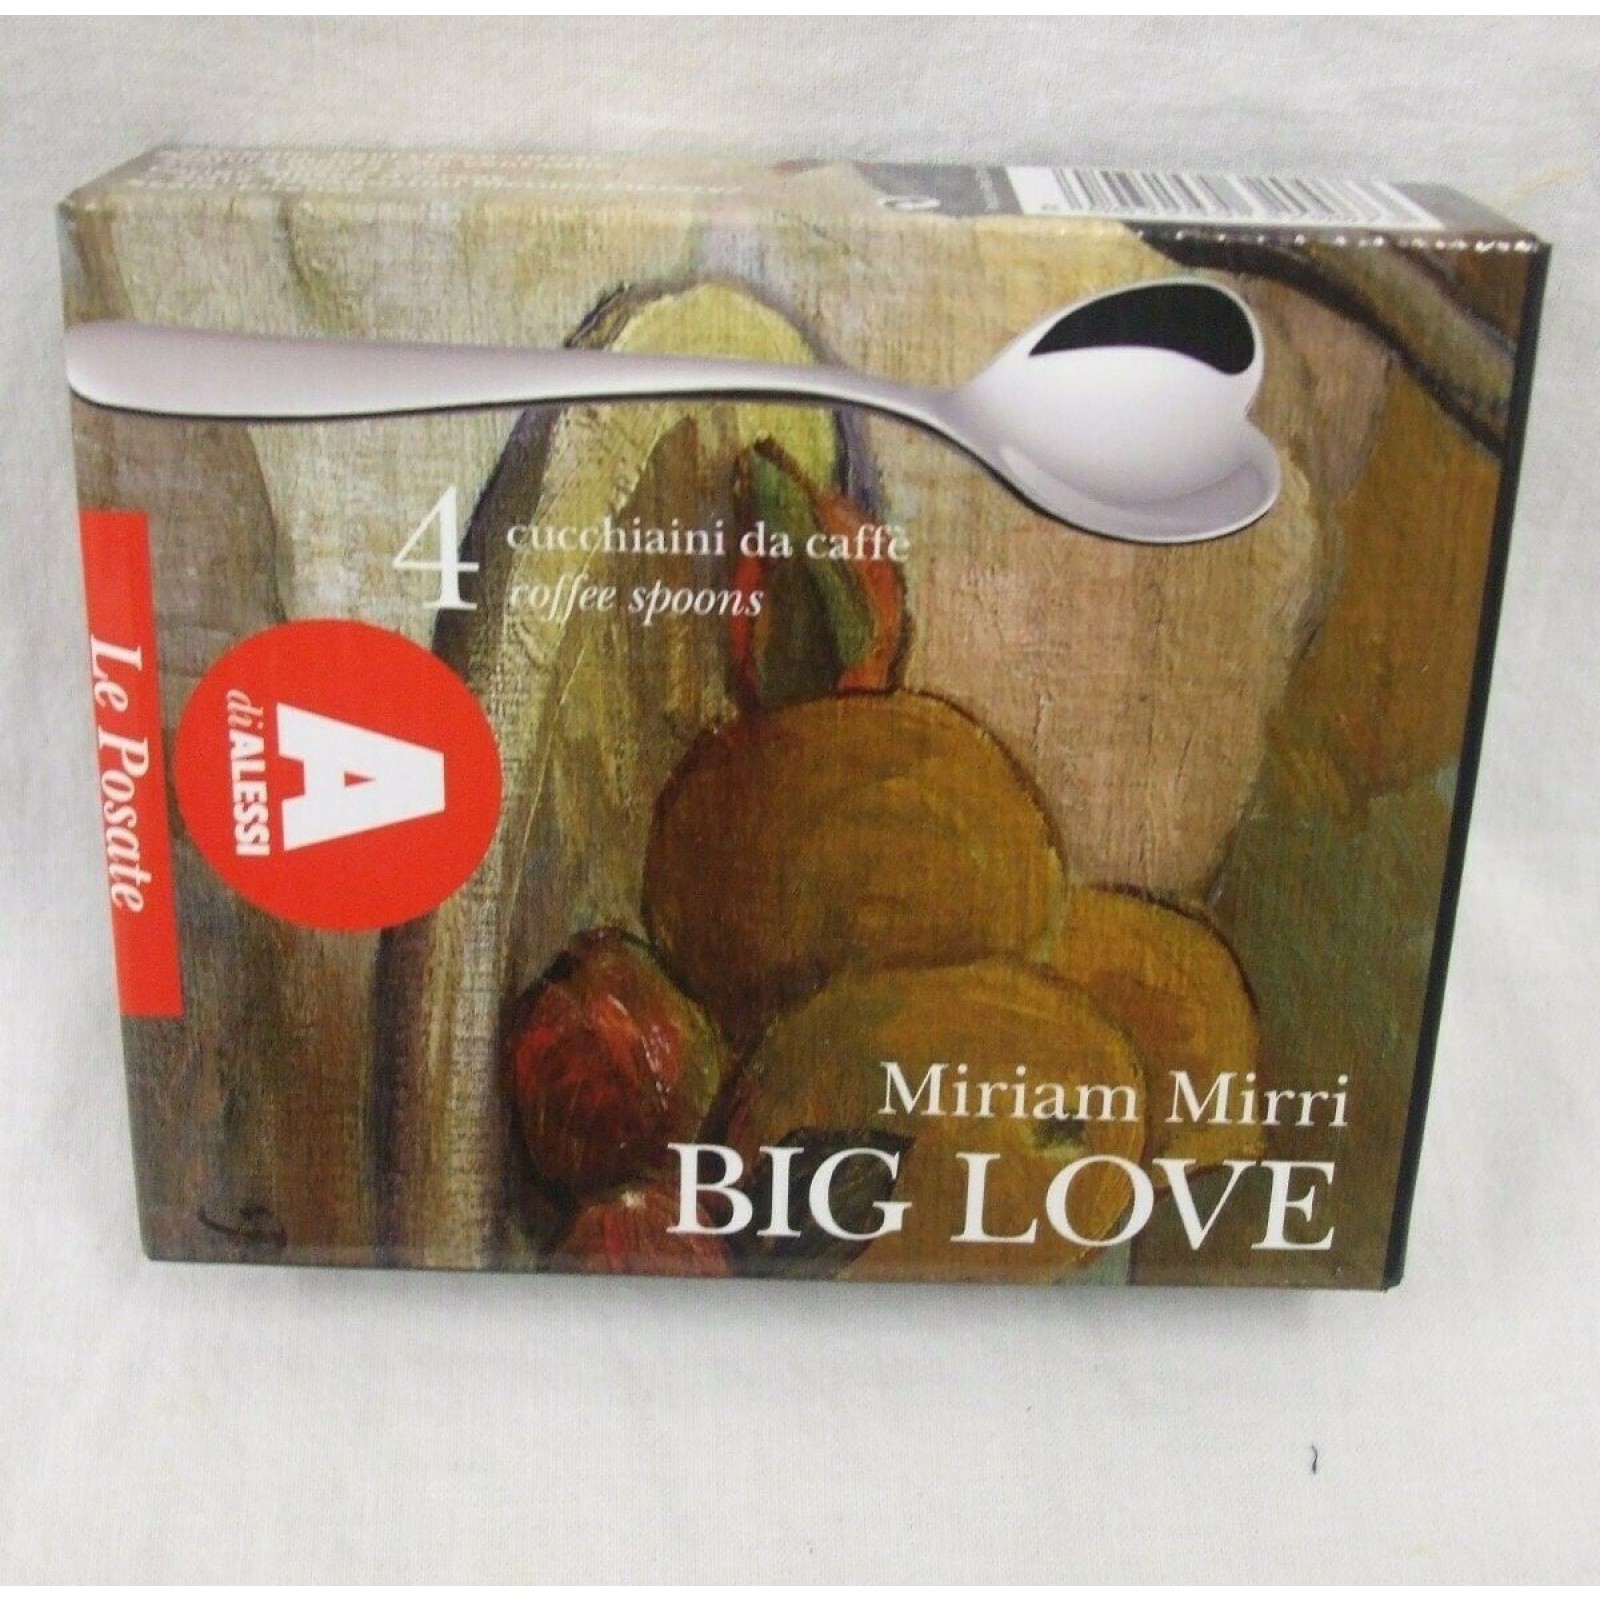 Alessi Big Love Spoon by Miriam Mirri